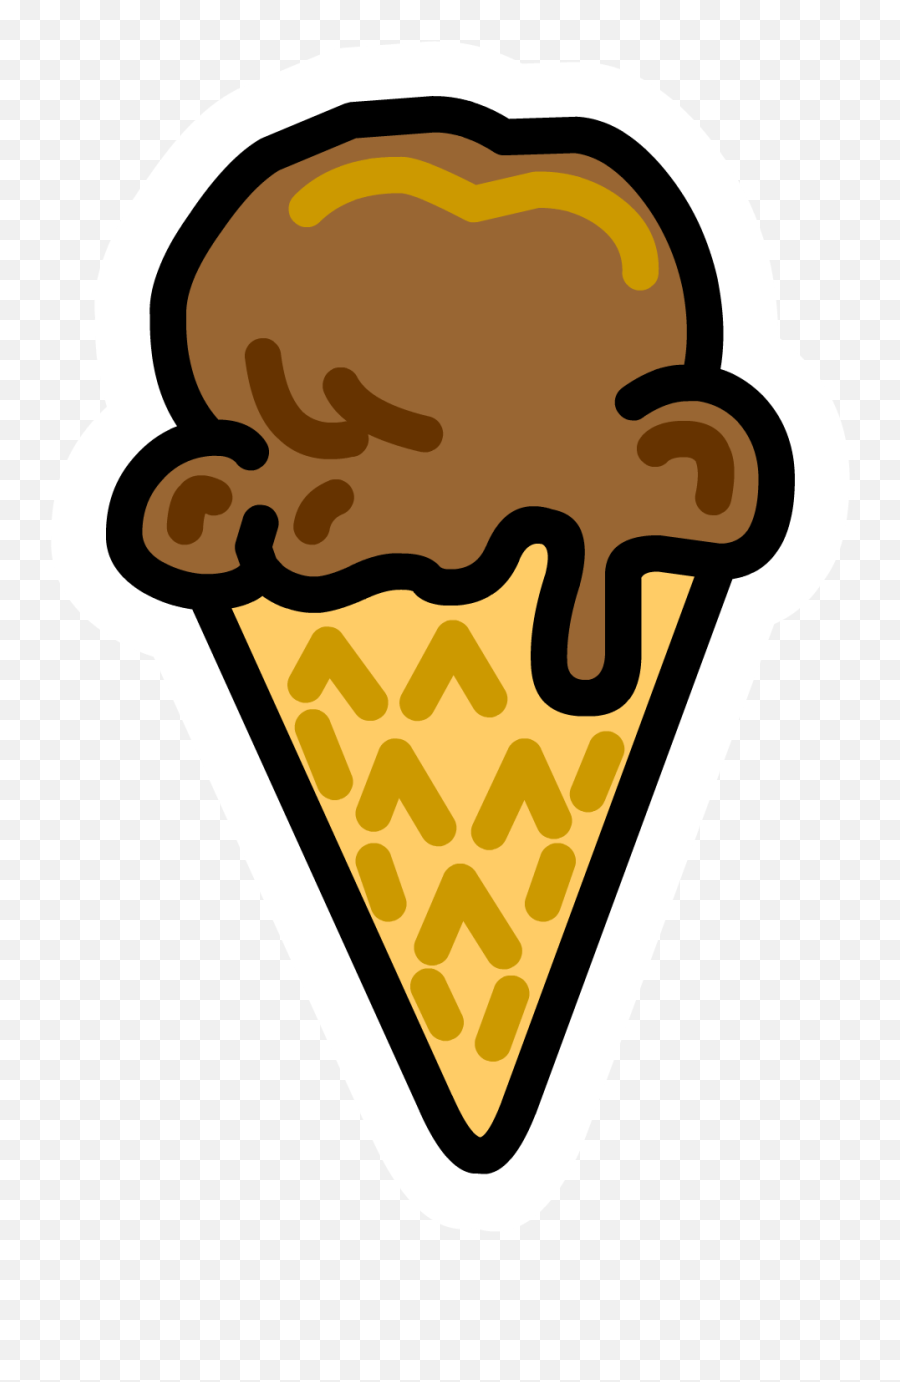 Icecream Cone Pin - Ice Cream Cone Chocolate Cartoon Emoji,Ice Cream Cone Emoji